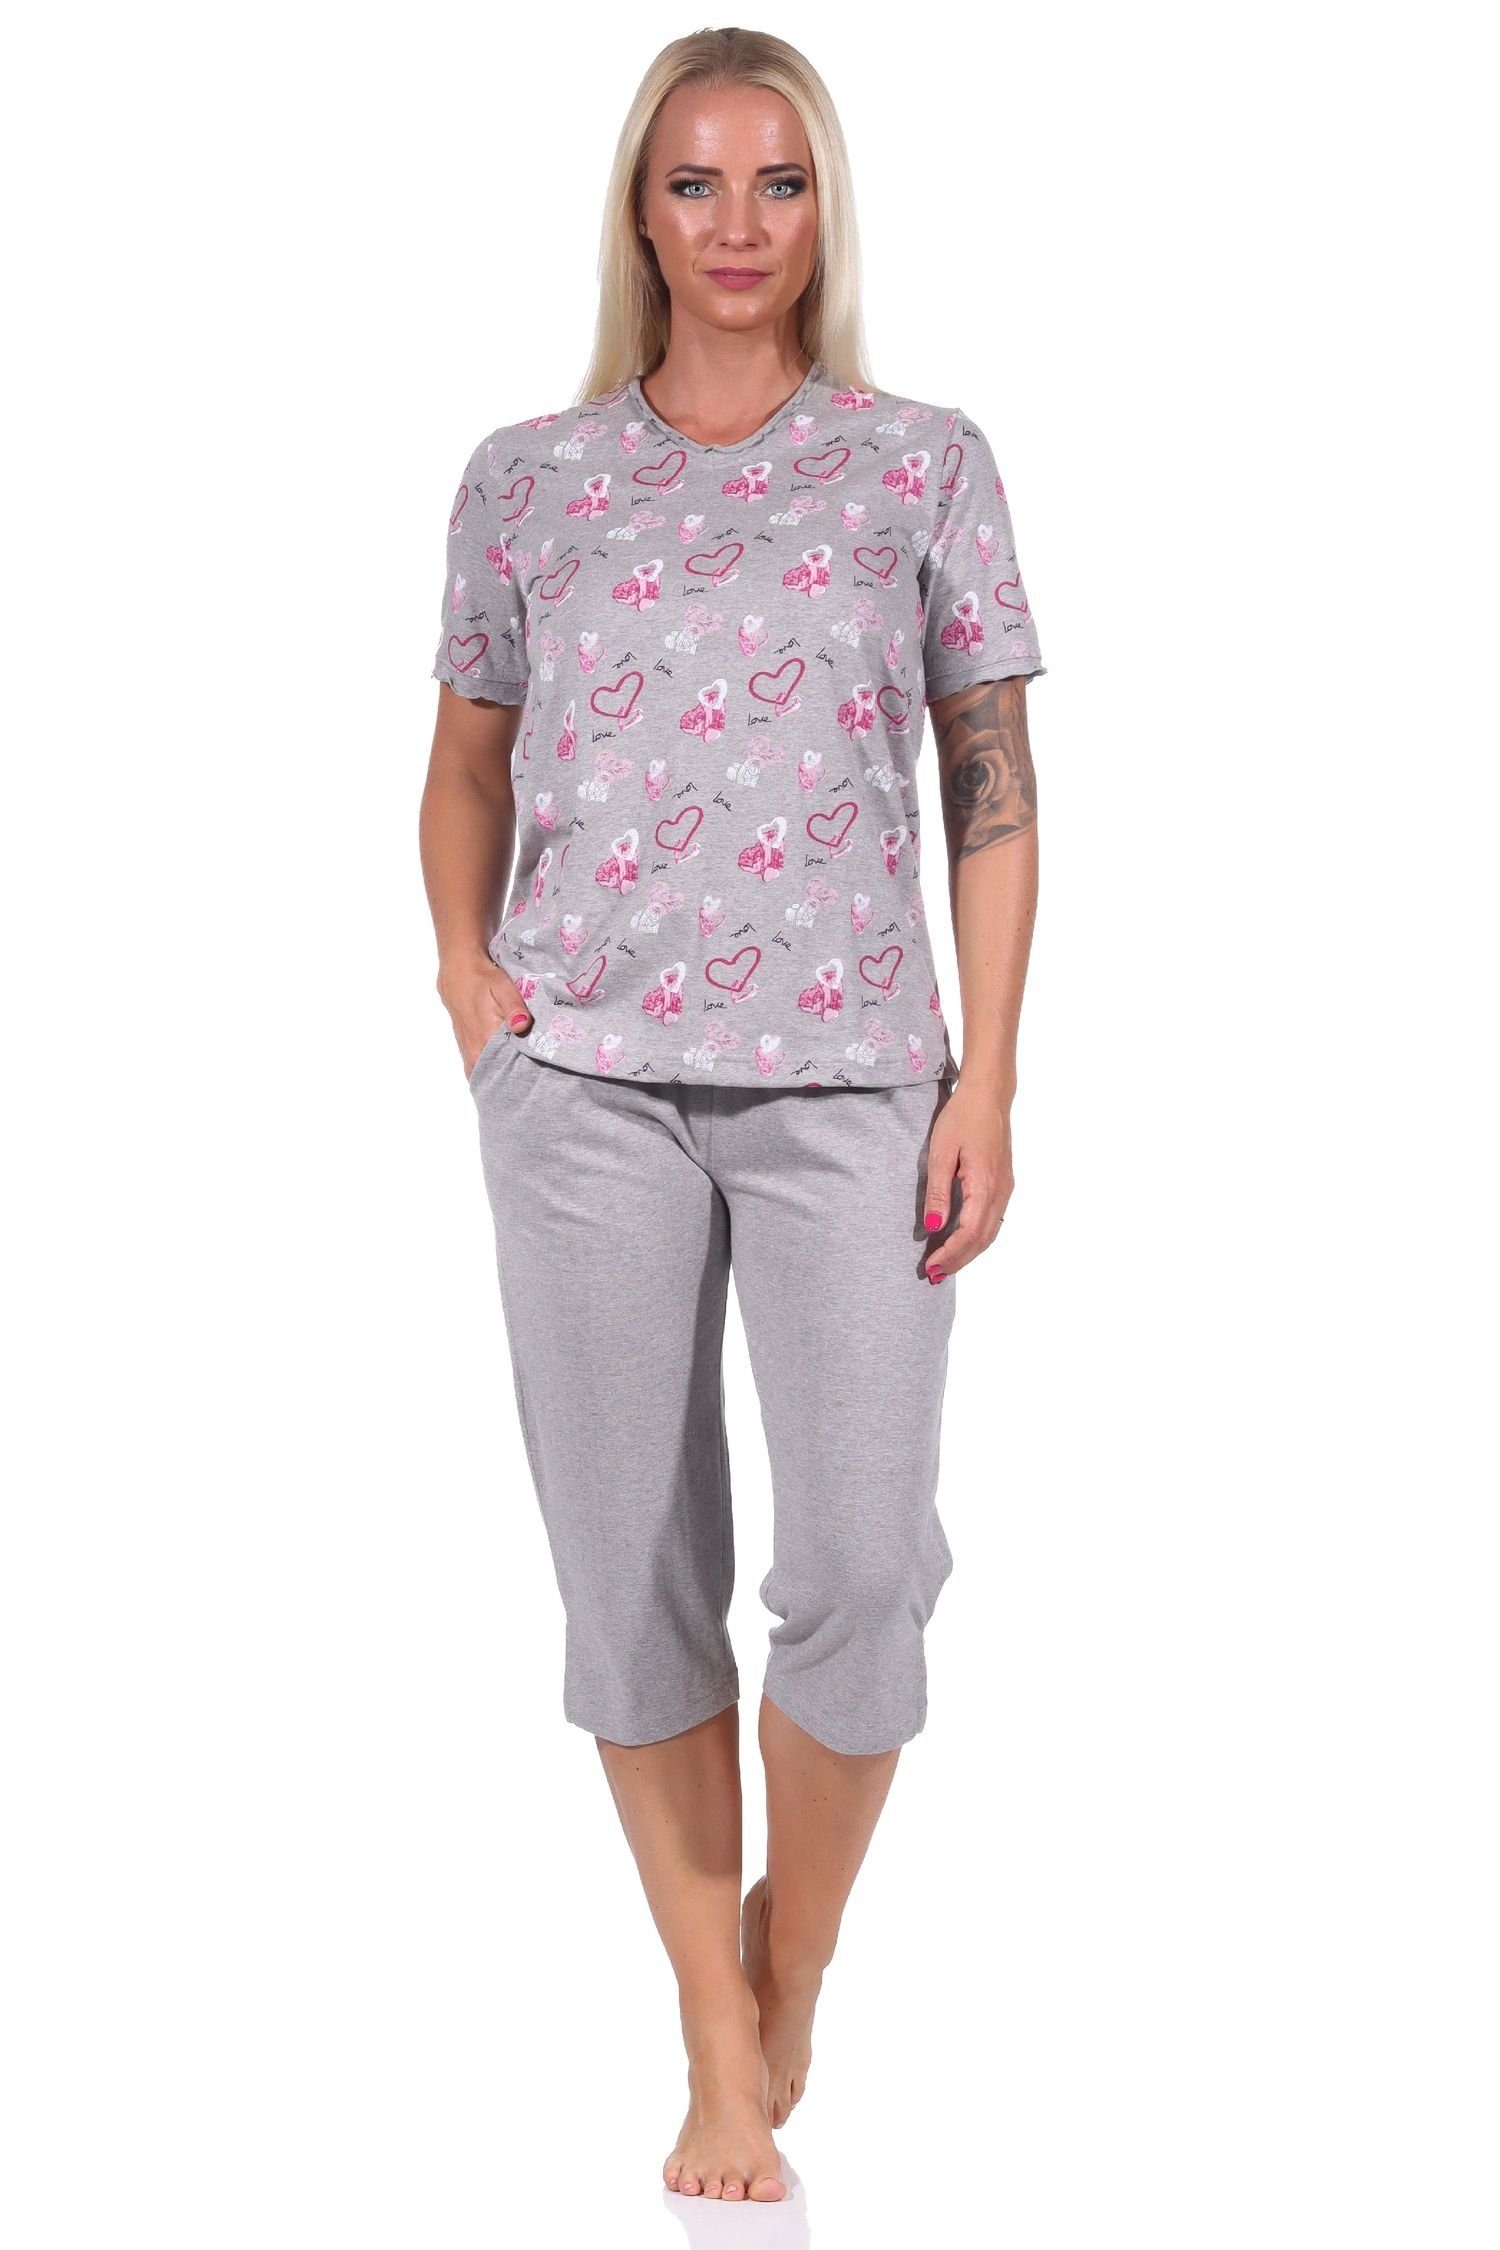 Normann Pyjama Damen kurzarm Übergrößen Schlafanzug in in grau-melange Herz auch Capri Optik 